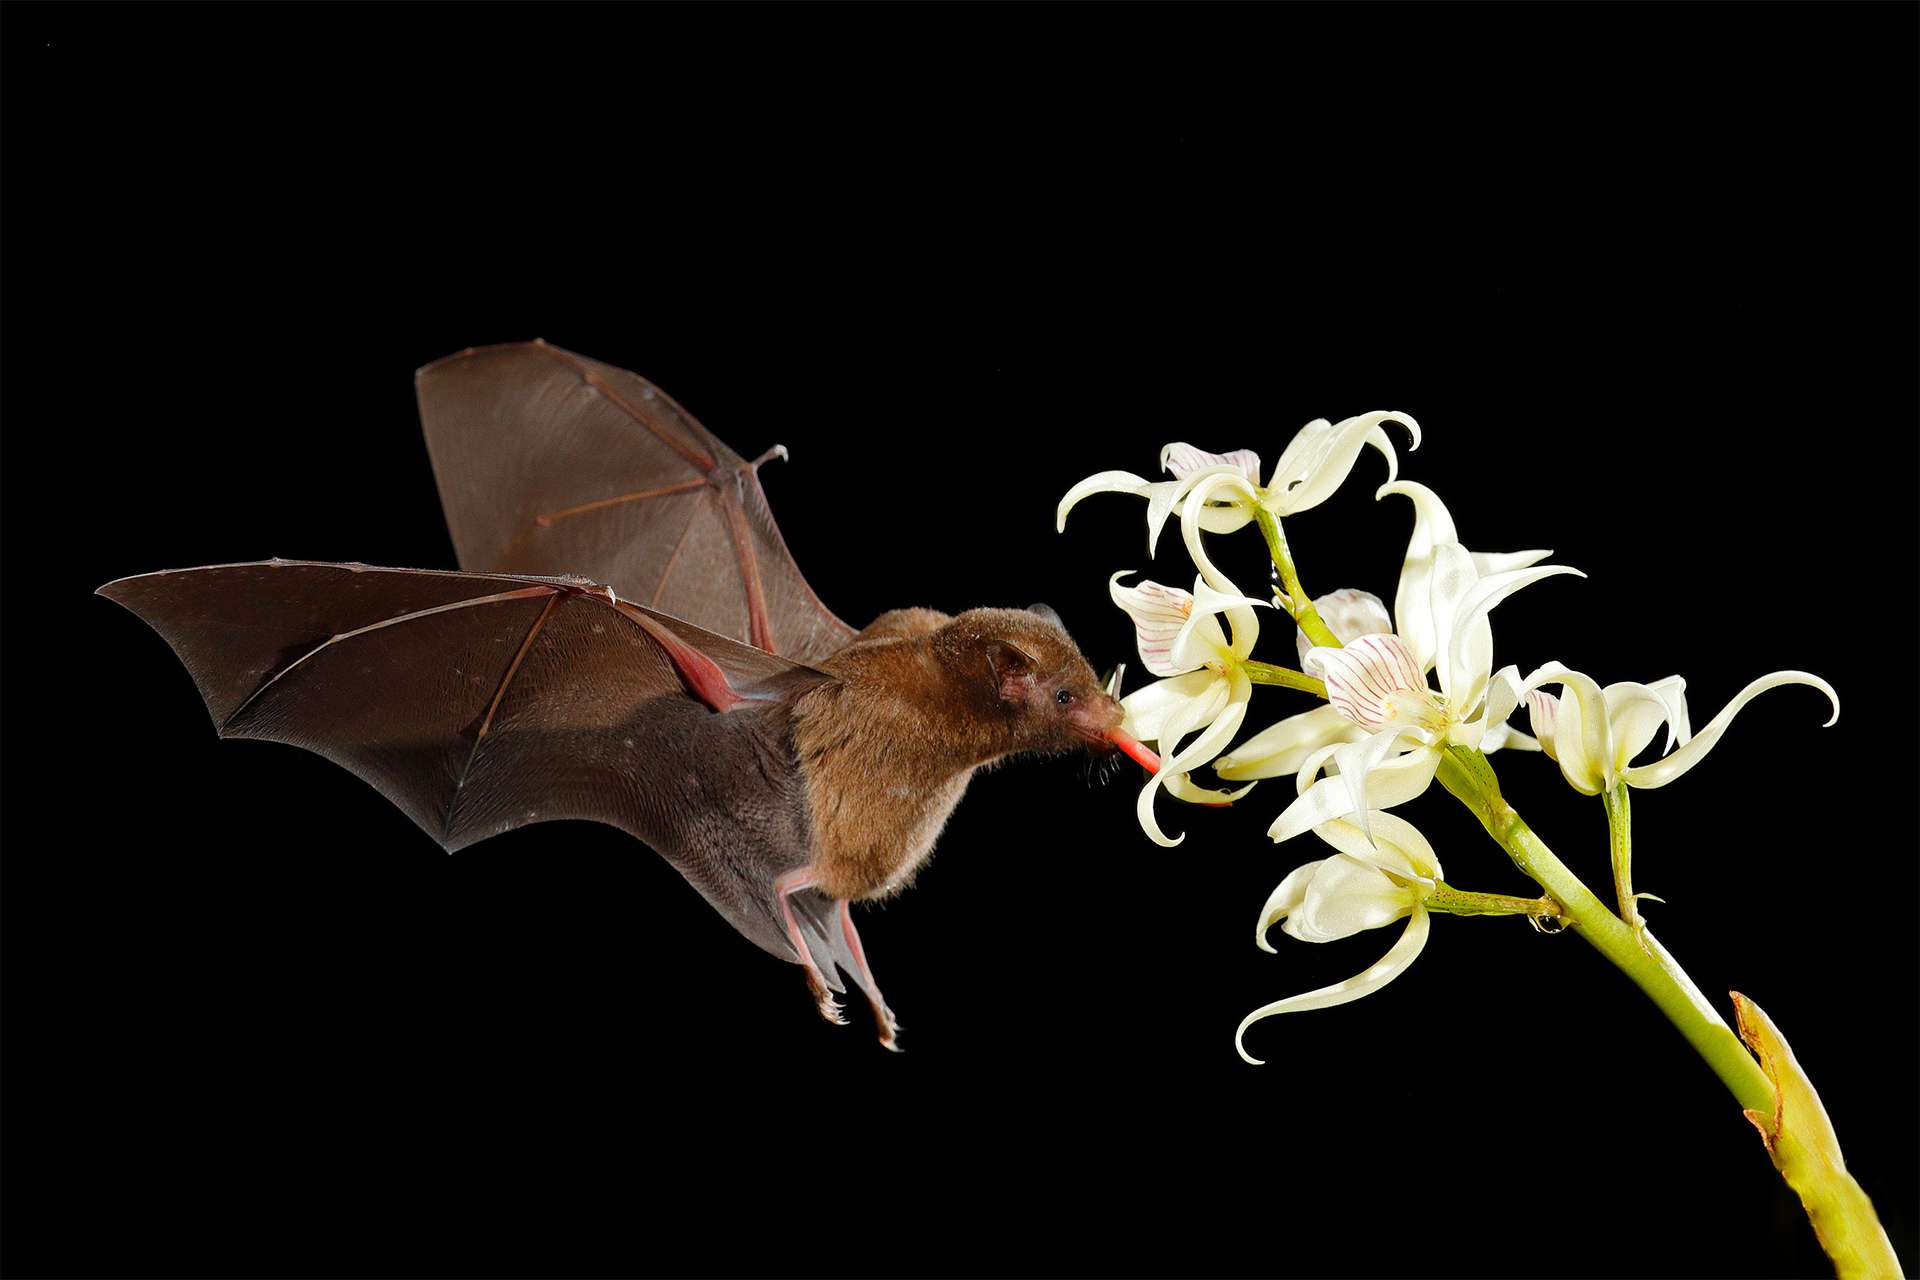 Orange nectar bat, Lonchophylla robusta, flying bat in dark night. Nocturnal animal in flight with white orchid flower. Wildlife action scene from tropic nature, Costa Rica